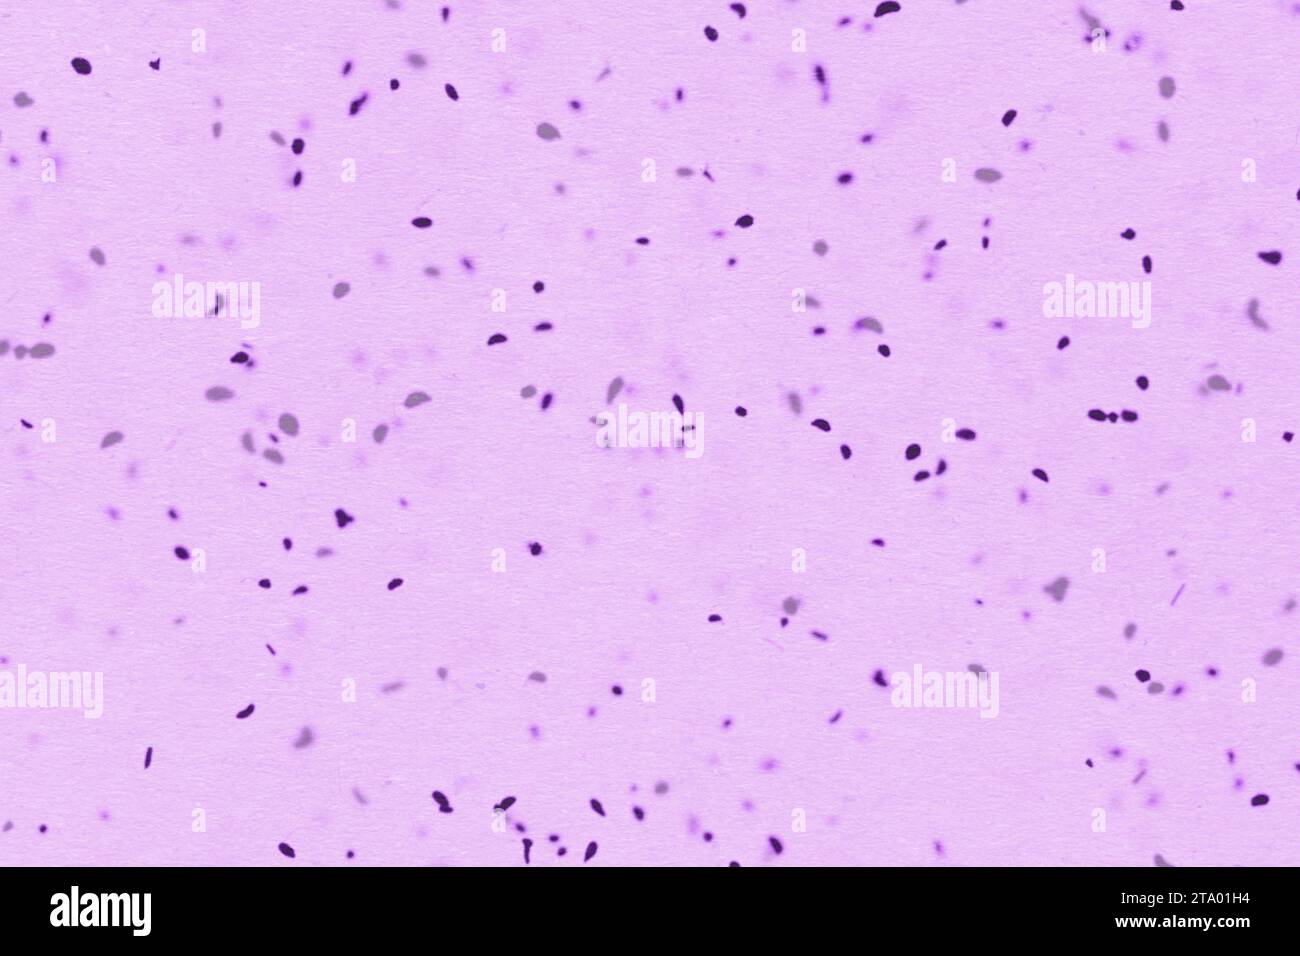 Bakterien oder Keime Mikroorganismus Zellen unter Mikroskop in der Farbe chemische rosa Flüssigkeit, verlangsamt Stockfoto